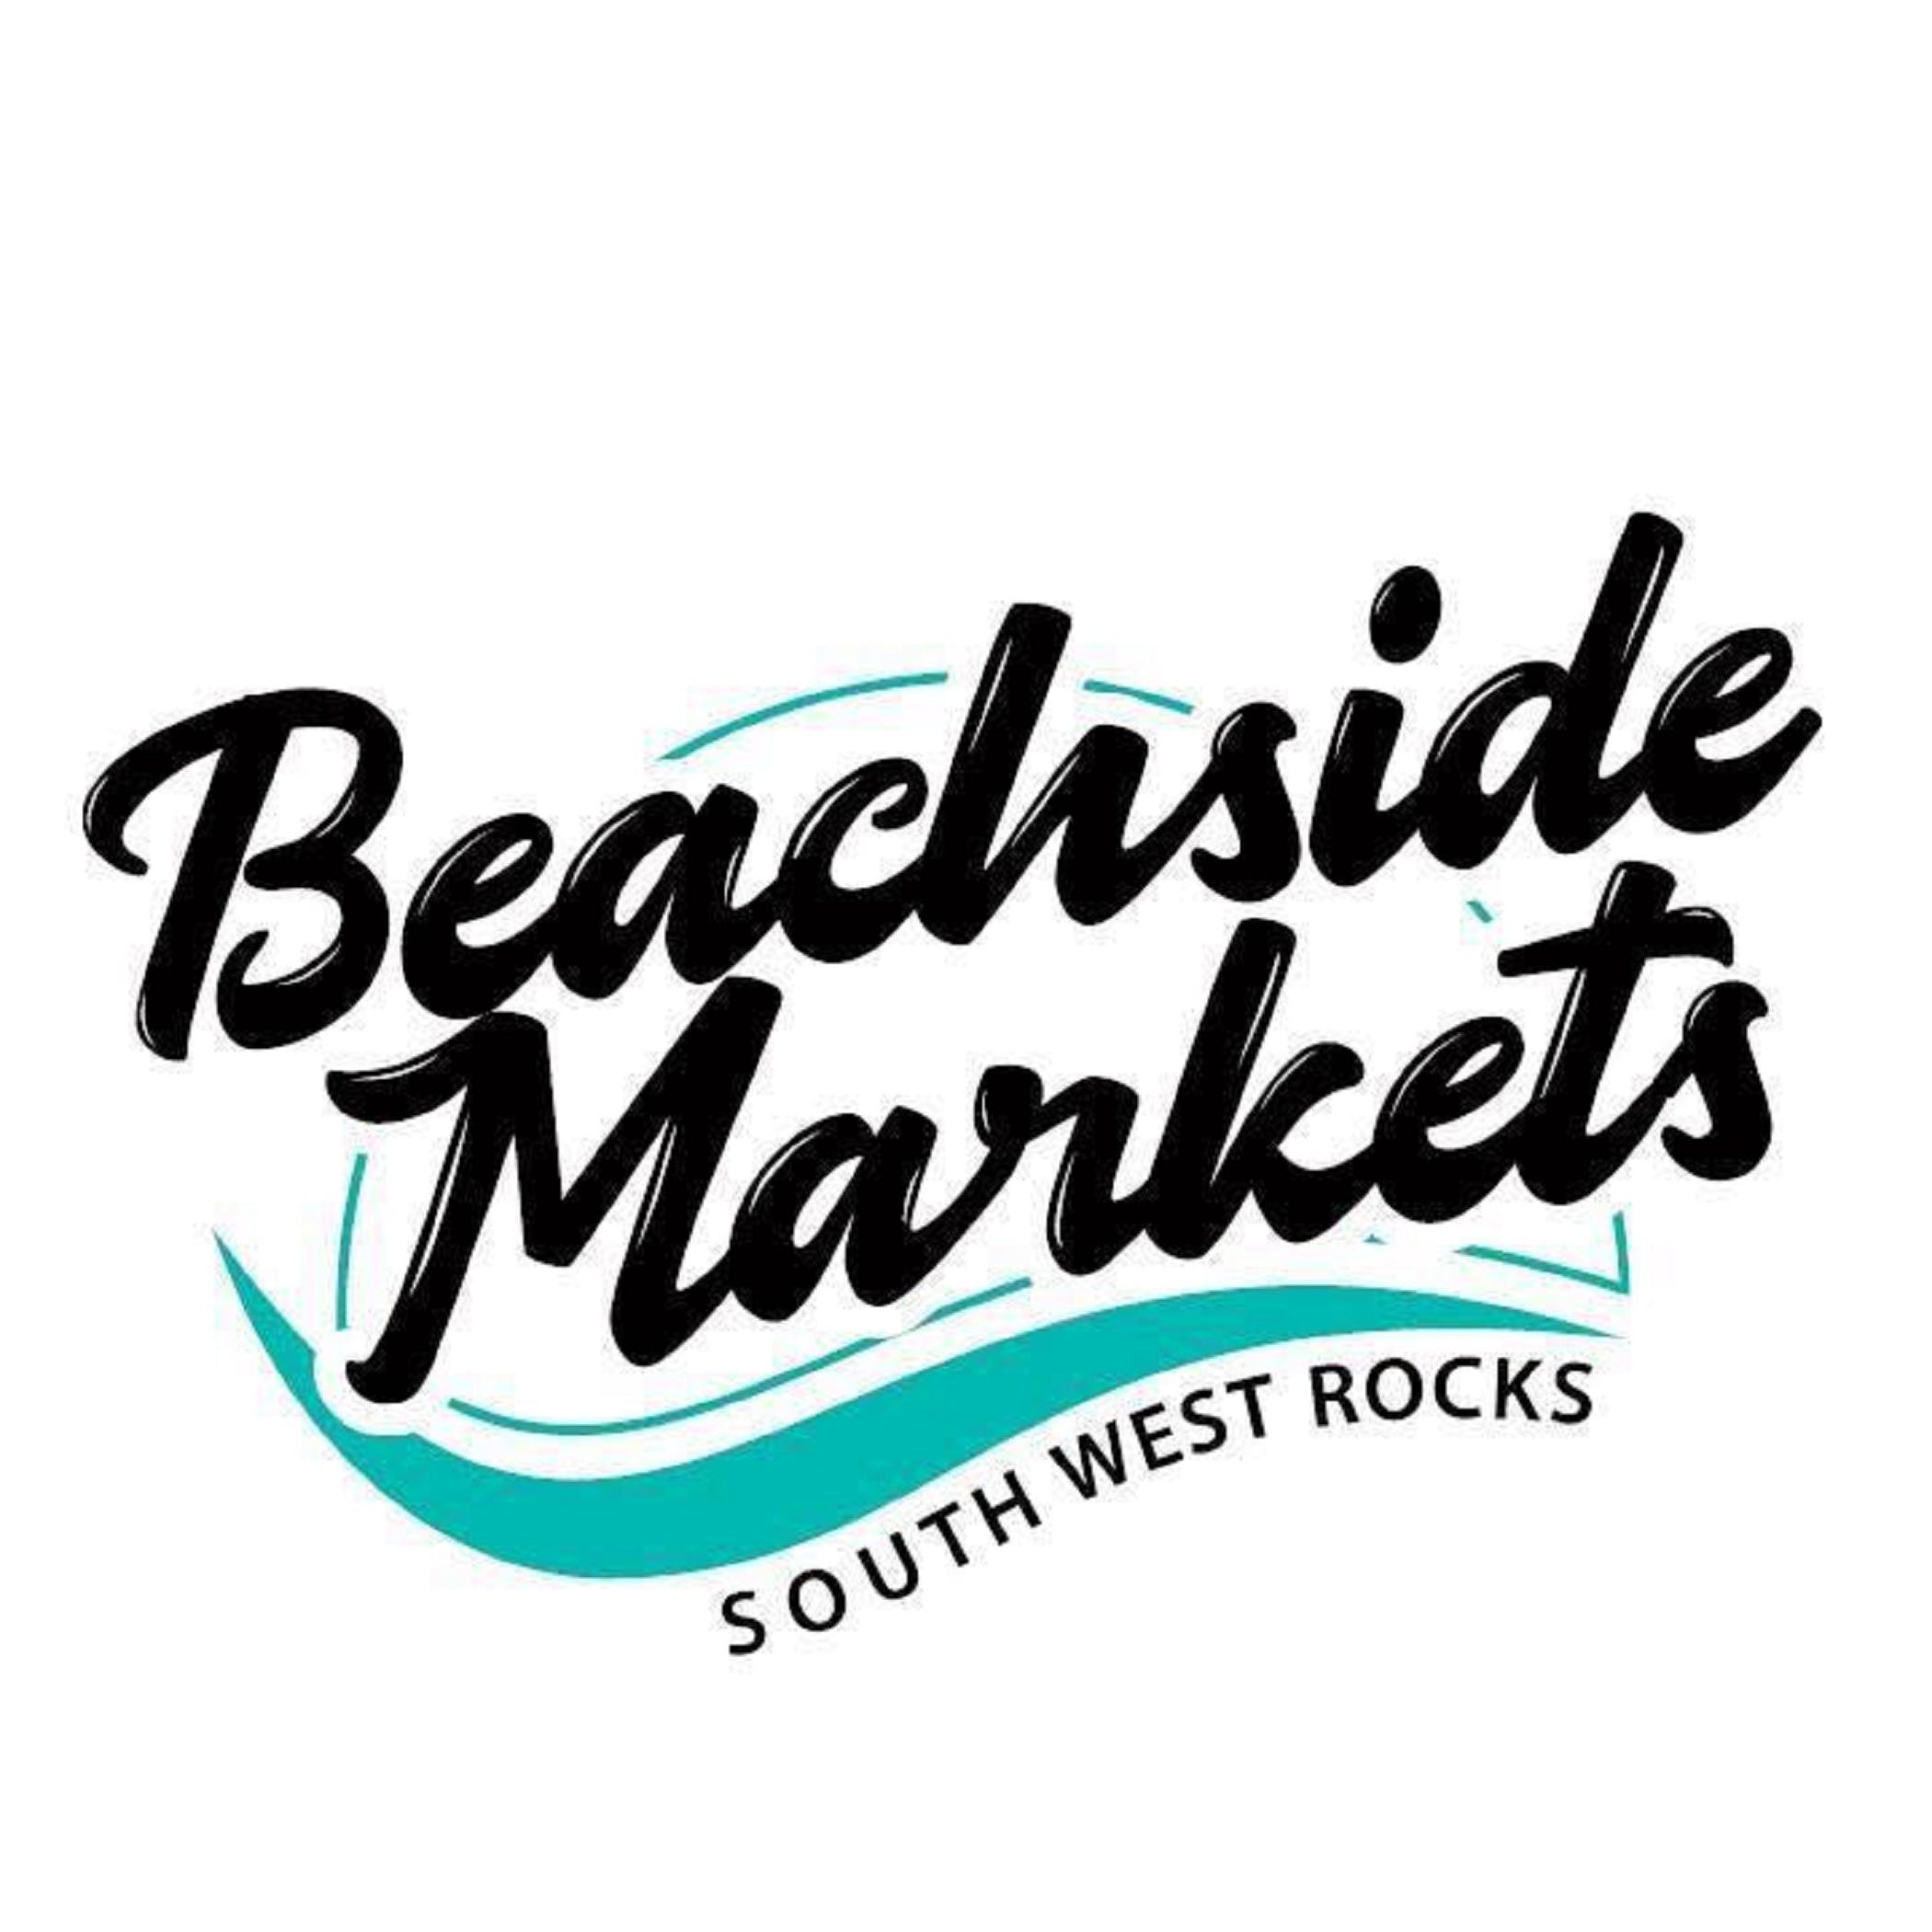 Beachside Markets South West Rocks - Accommodation Gold Coast